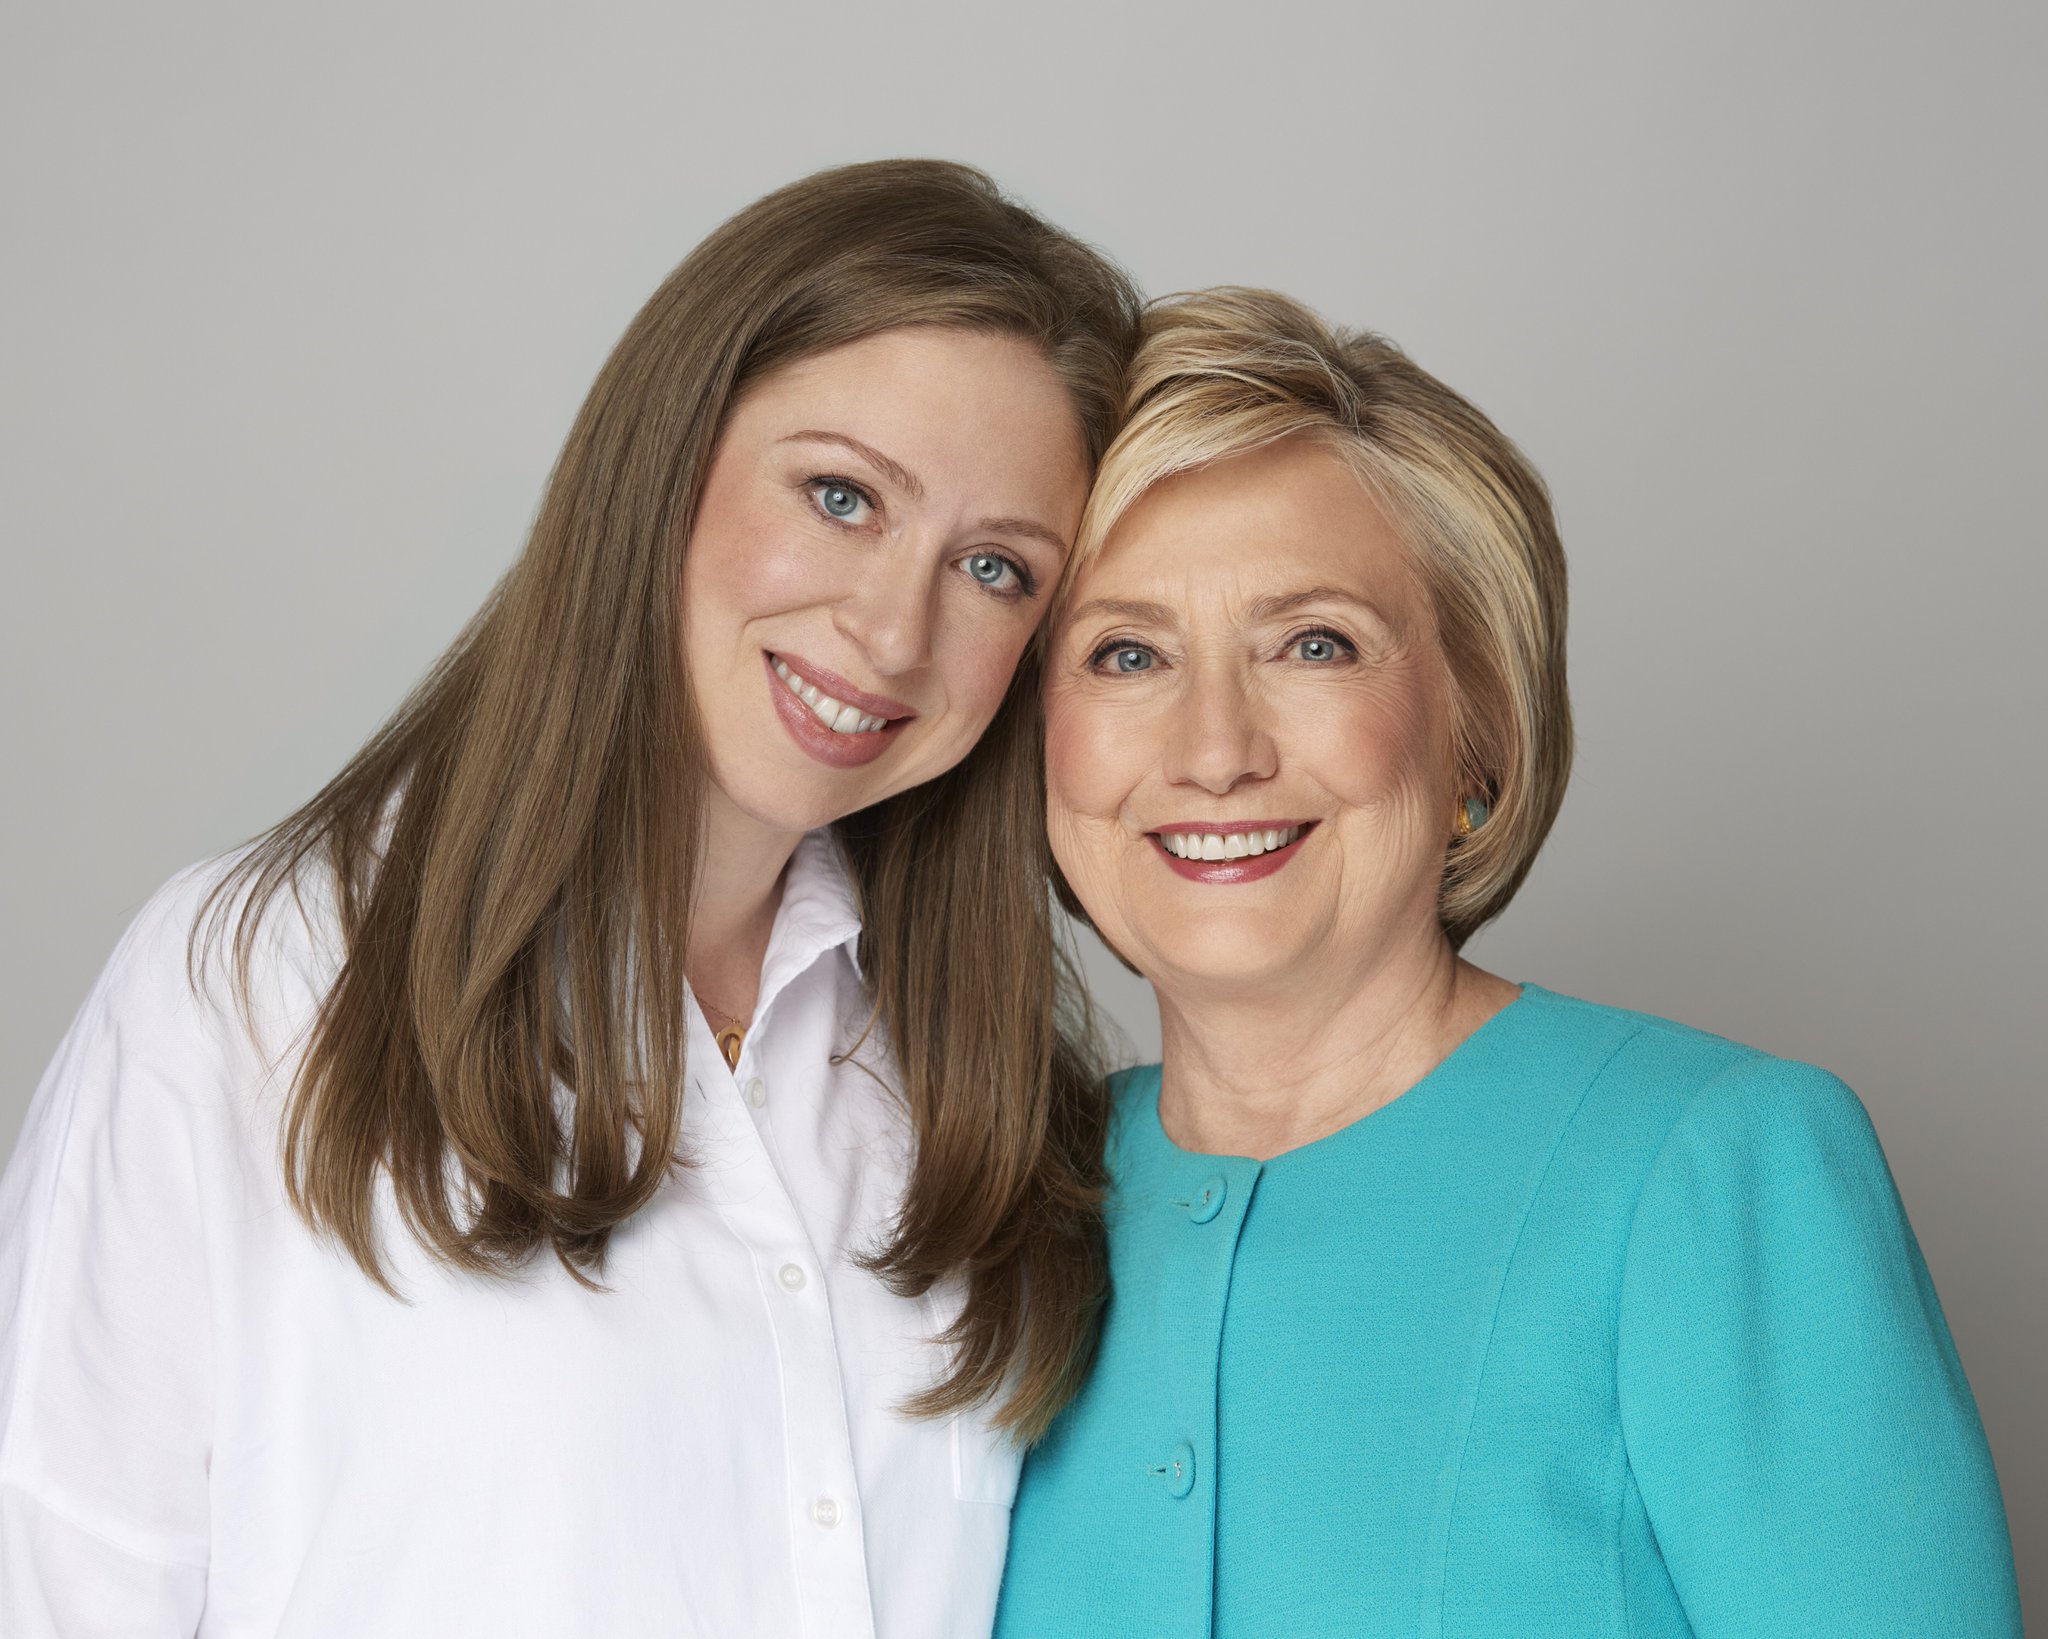 Hillary e Chelsea Clinton